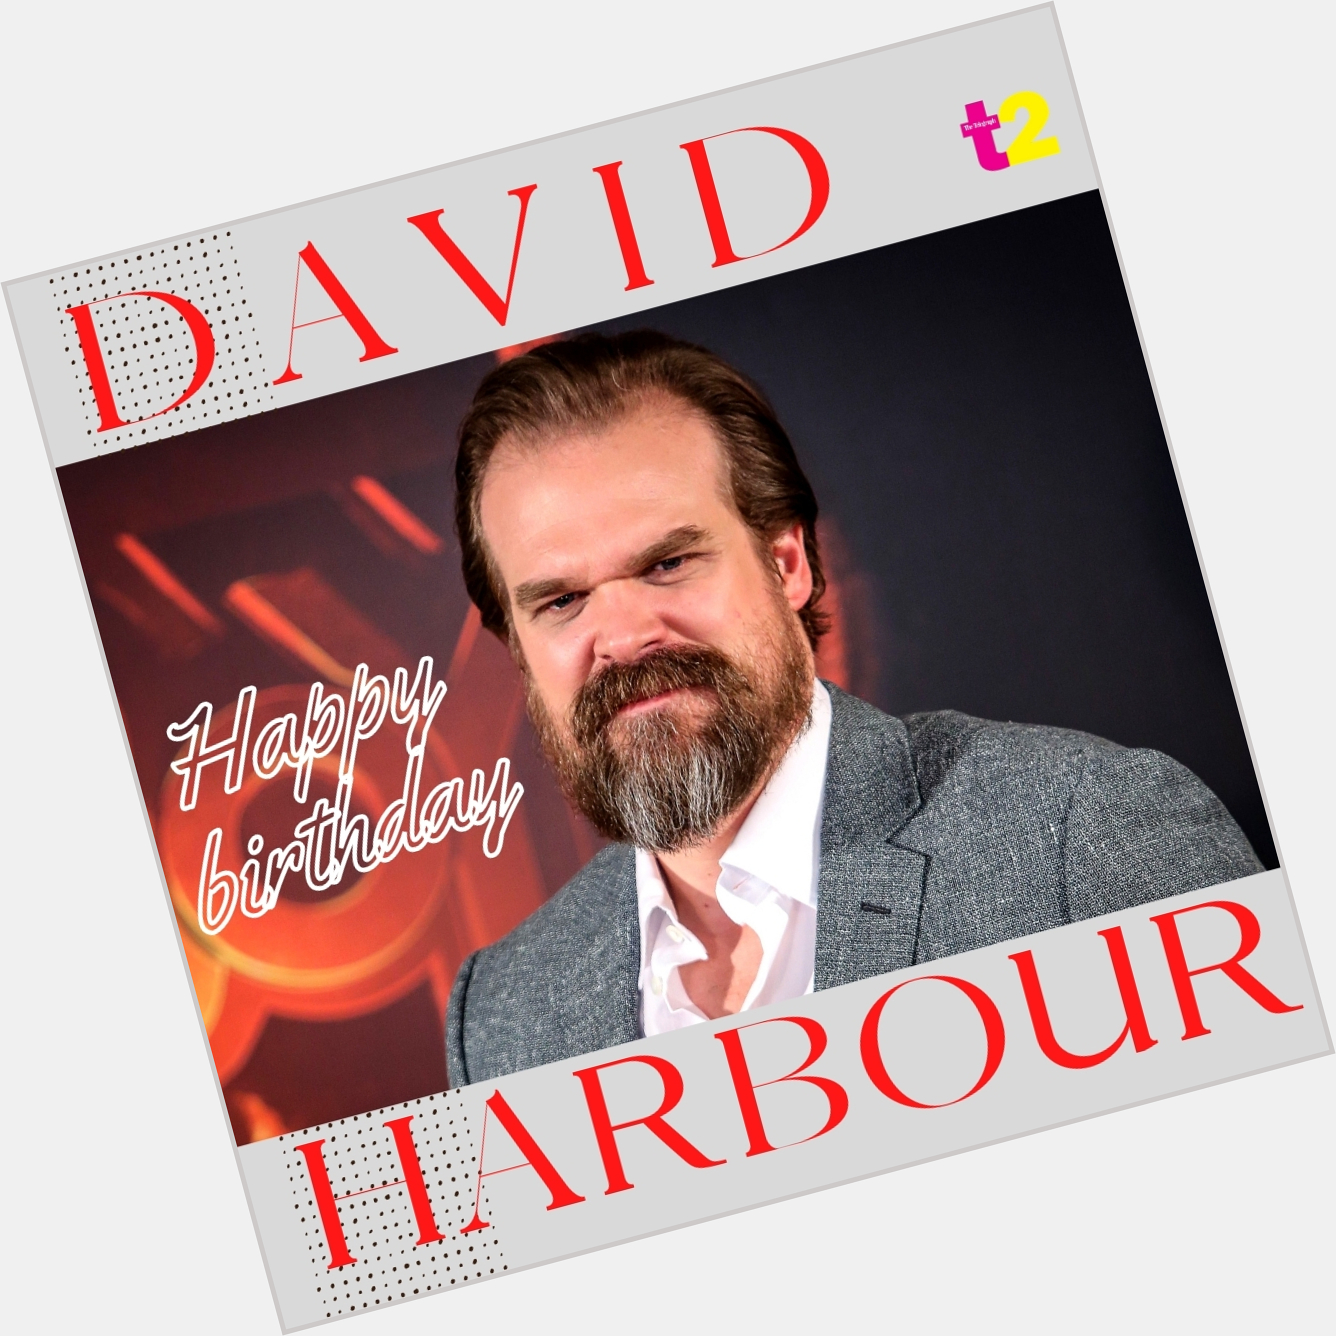 We love him as Hopper in Stranger Things. Happy birthday, David Harbour! 